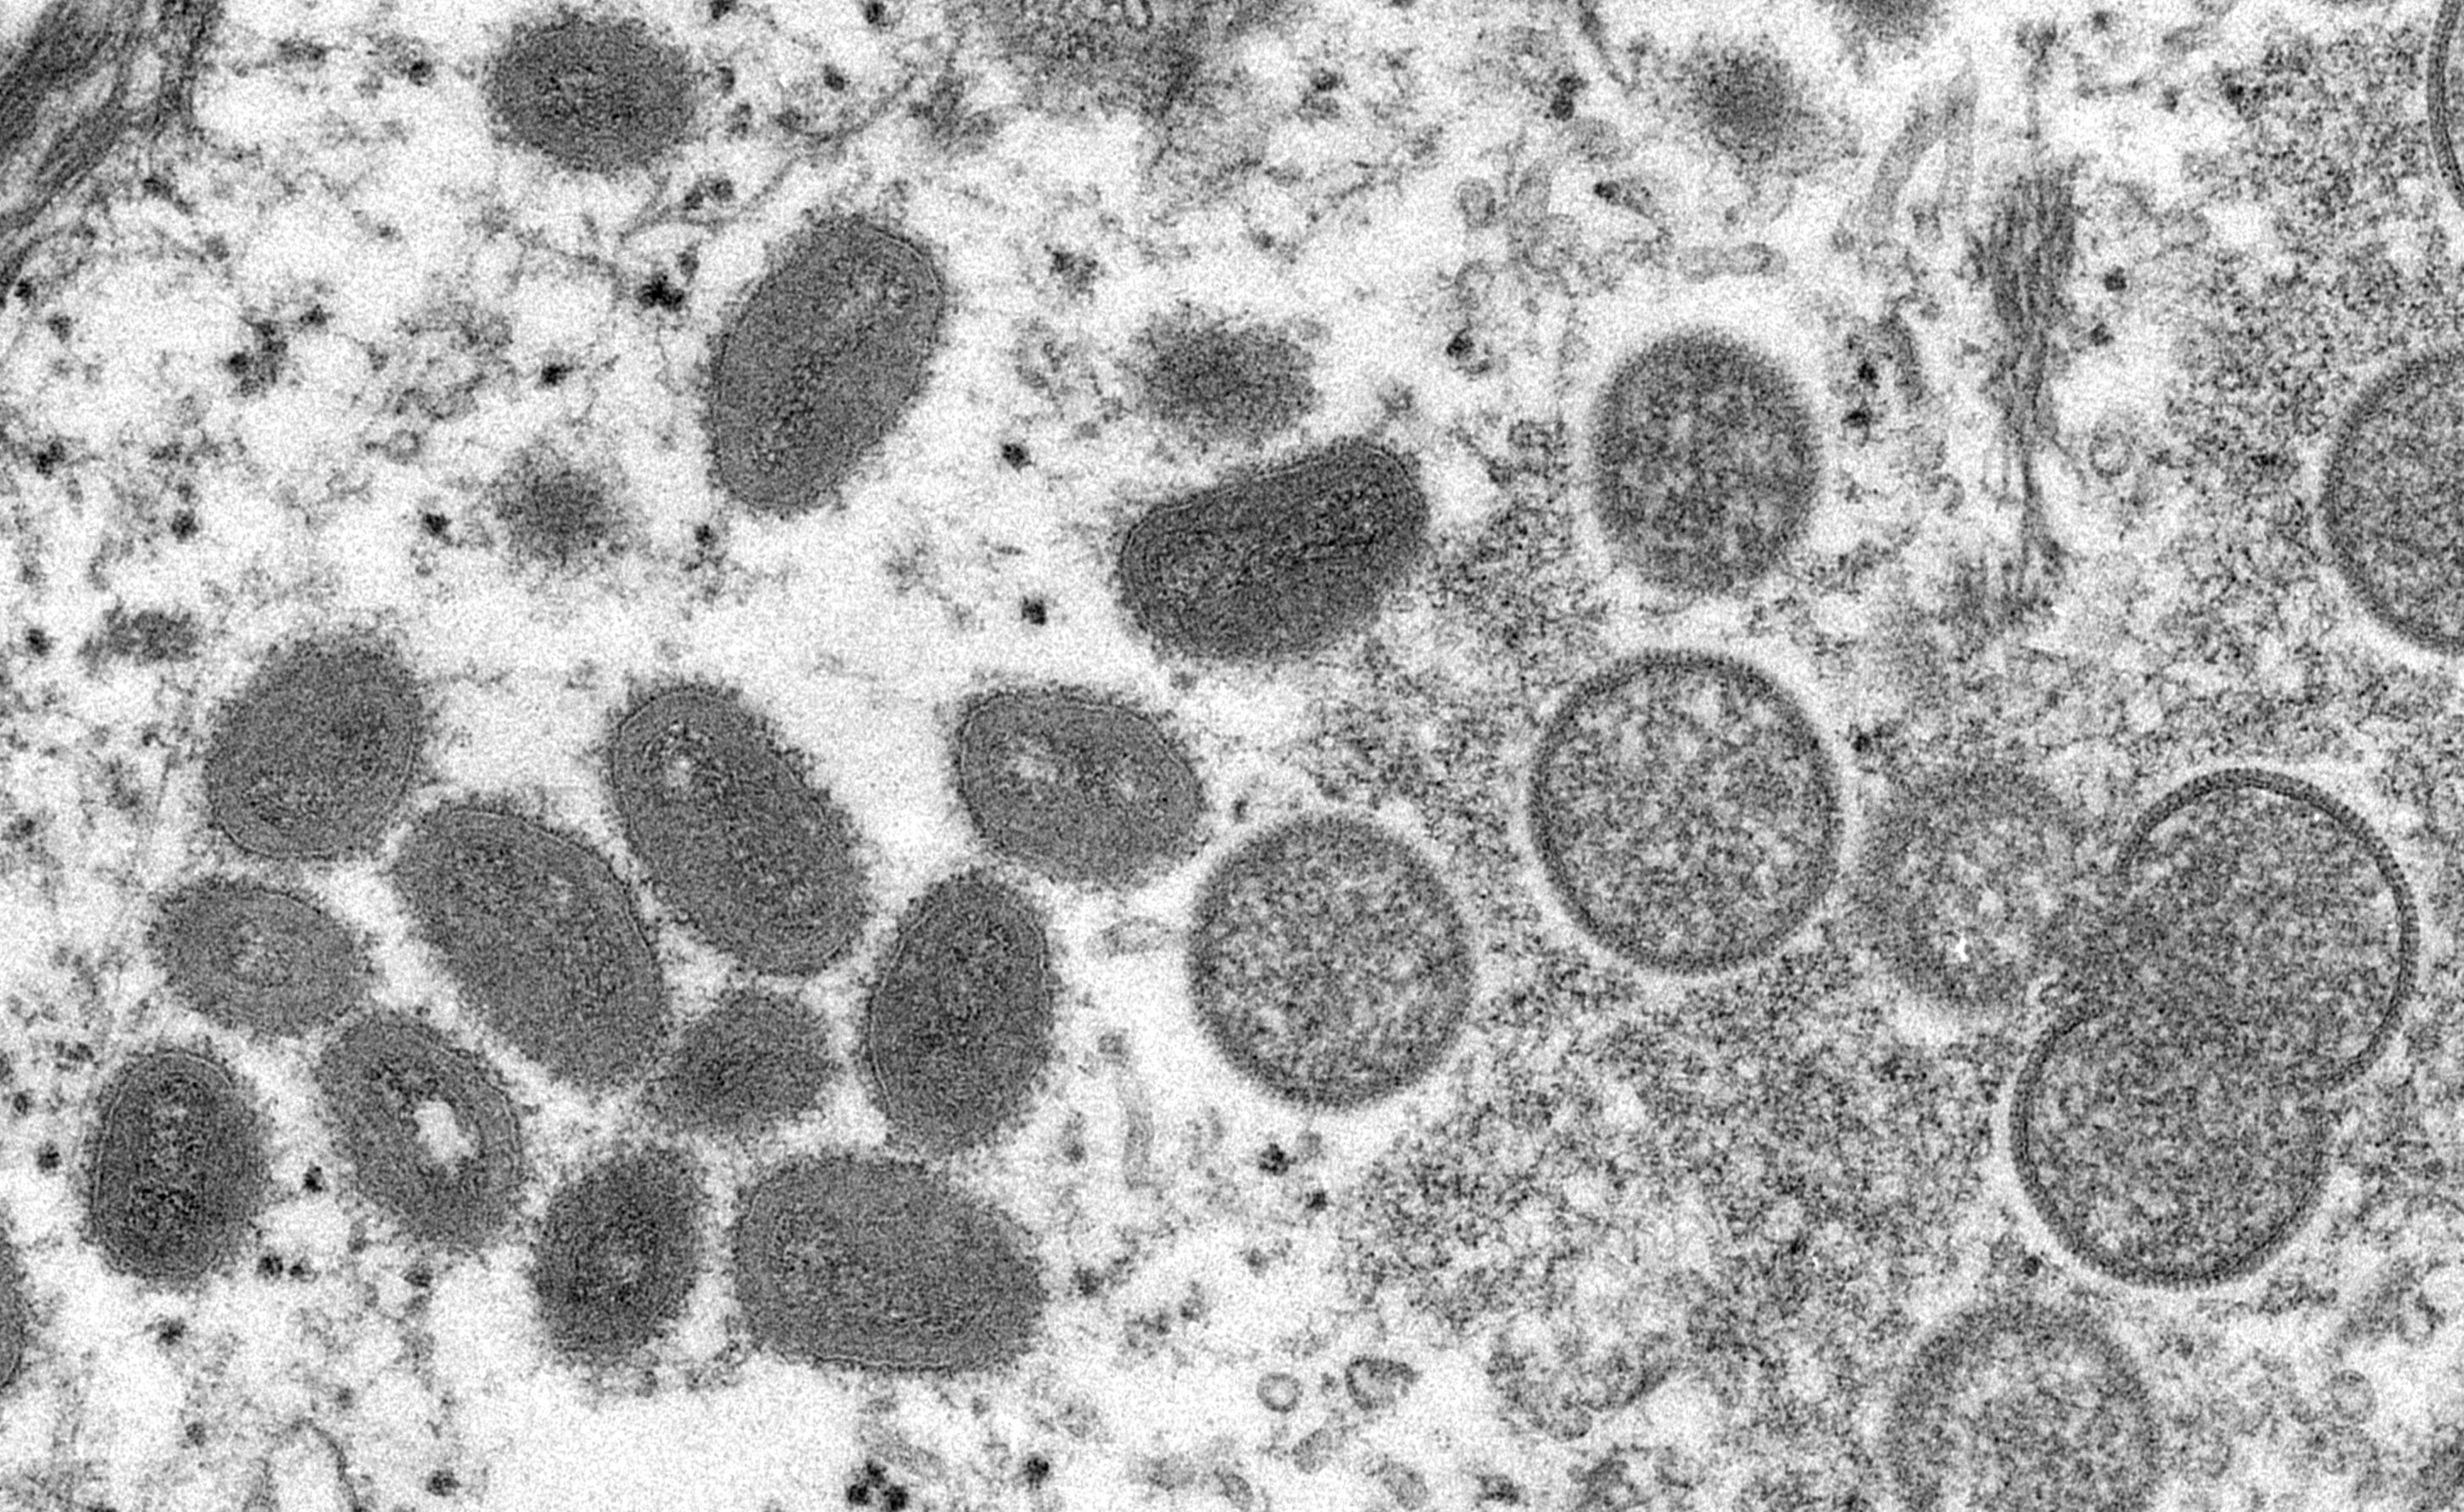 Gambar mikroskop elektron (EM) menunjukkan partikel virus monkeypox dewasa berbentuk oval serta sabit dan partikel bulat dari virion yang belum matang, diperoleh dari sampel kulit manusia klinis yang terkait dengan wabah anjing padang rumput tahun 2003 dalam gambar tidak bertanggal yang diperoleh Reuters, Mei 18, 2022. (Foto Reuters)